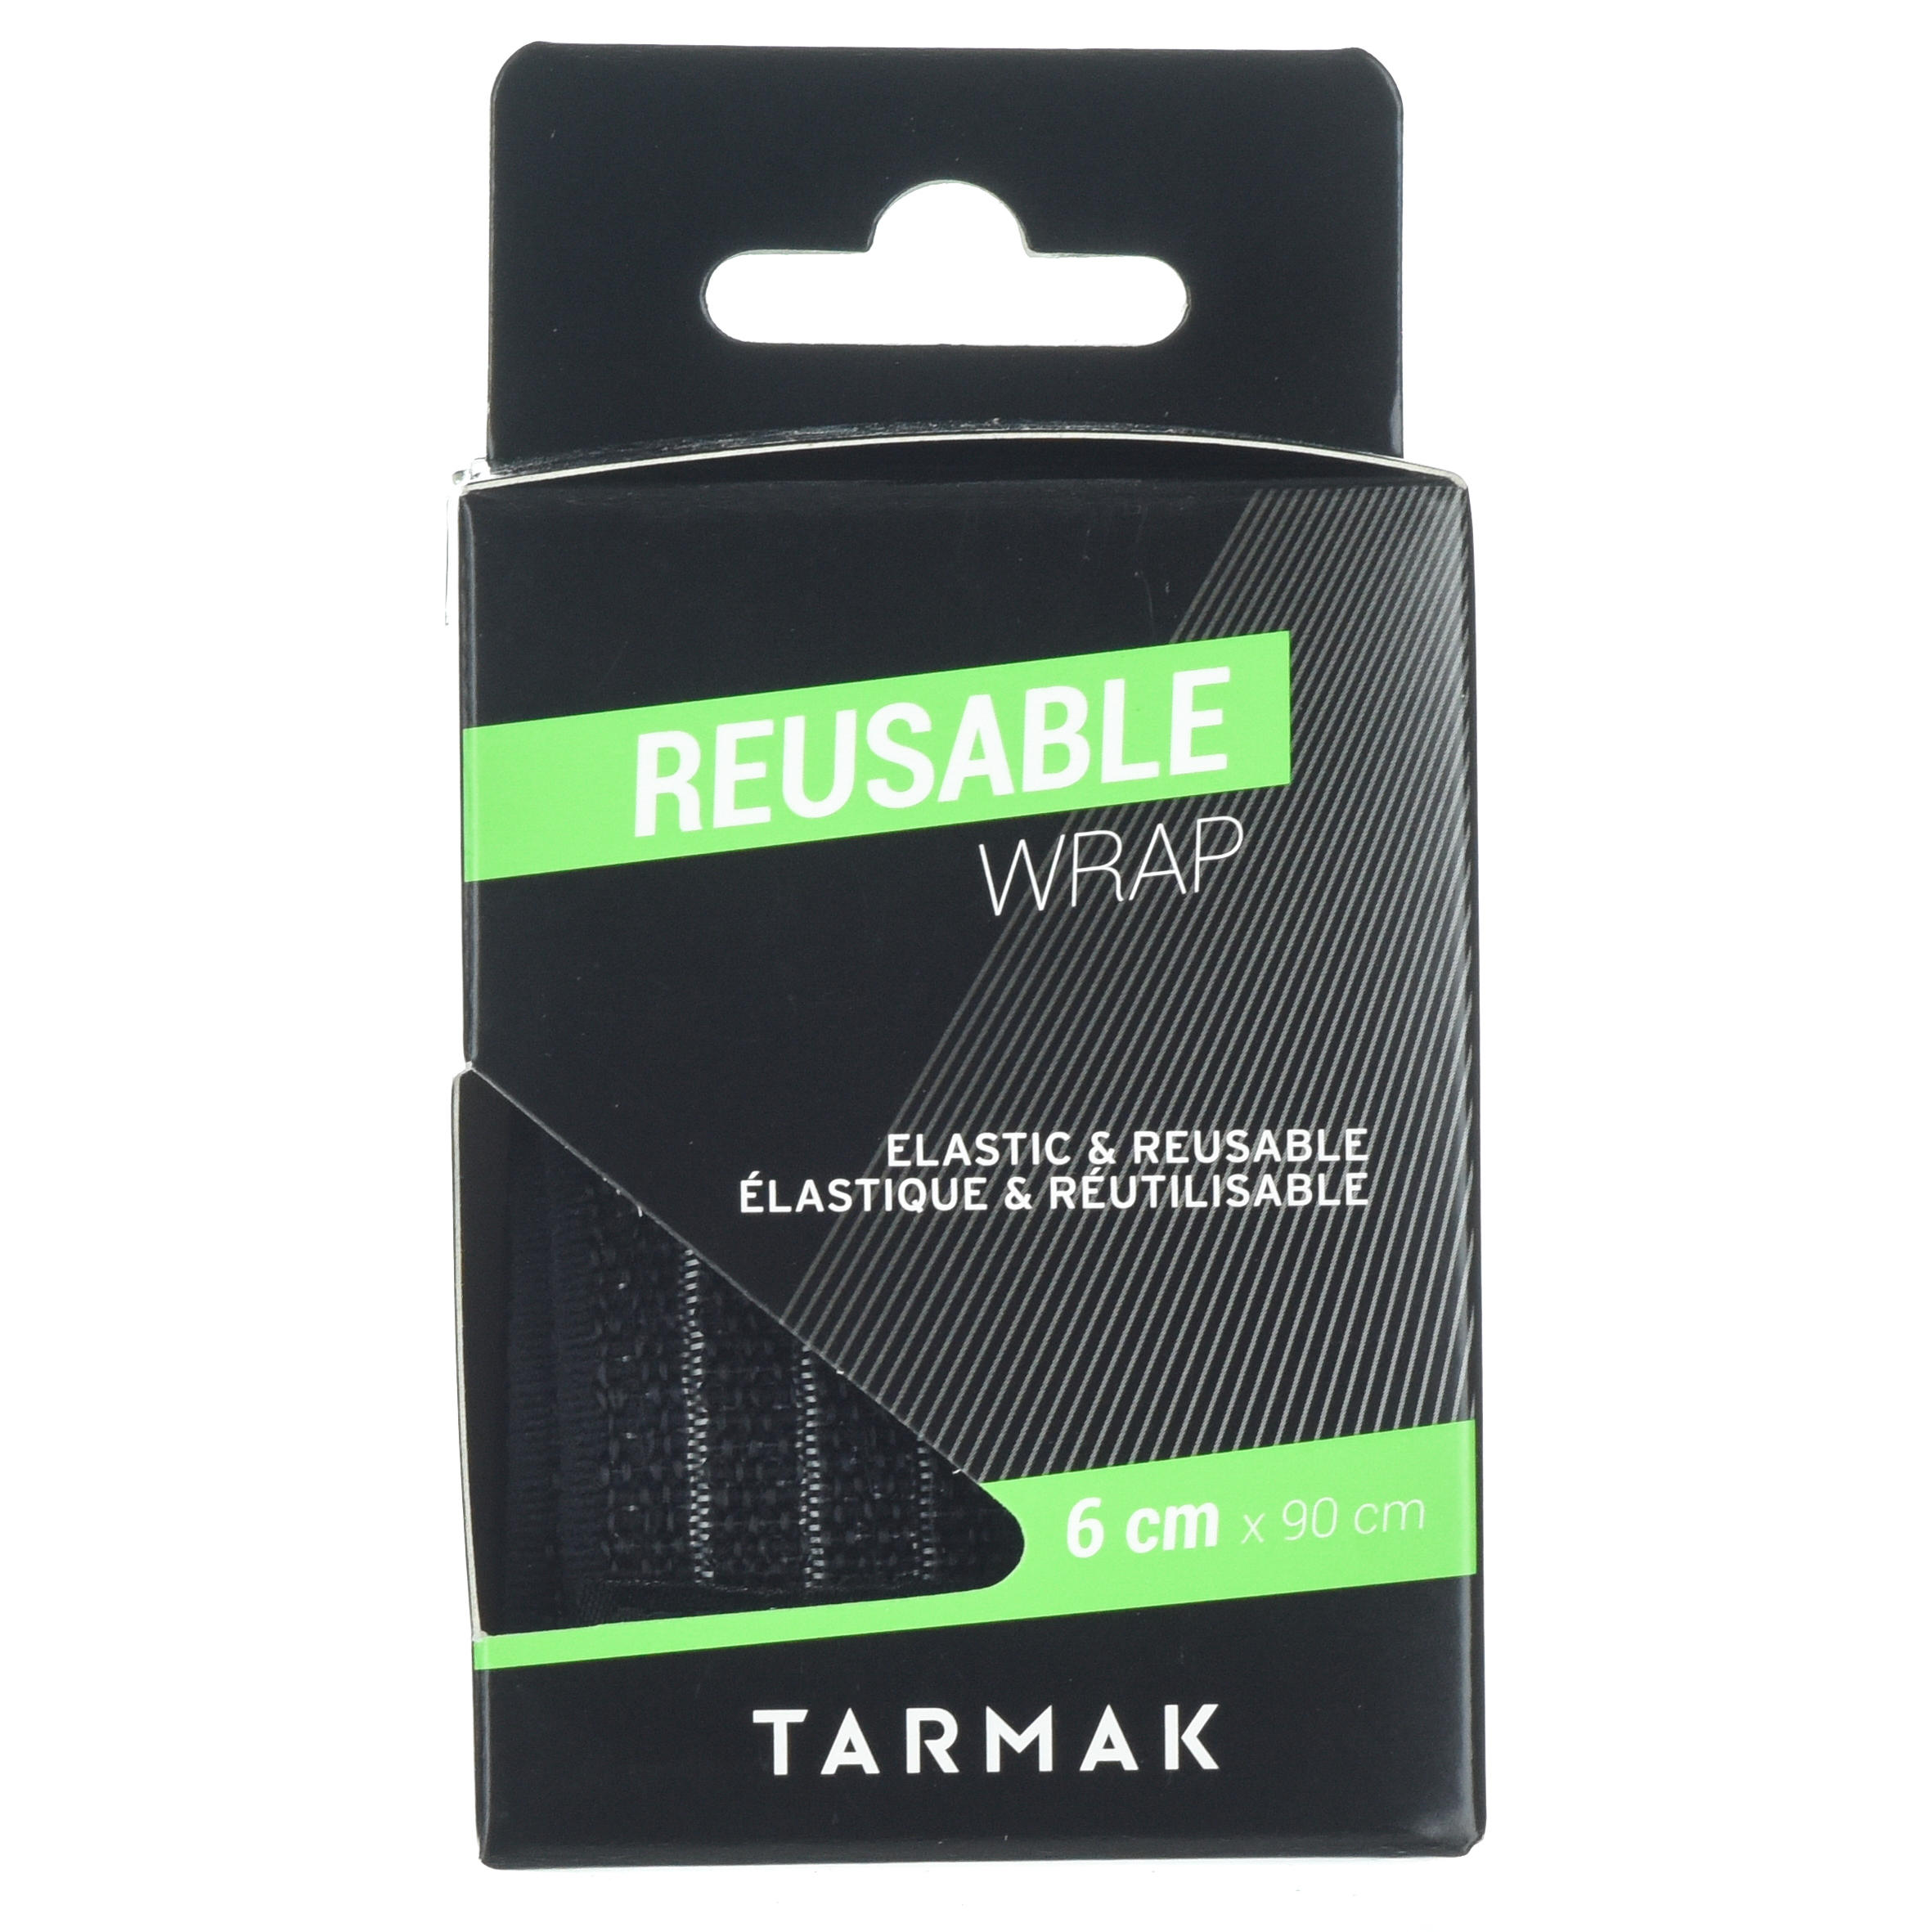 6 cm x 0.9 m Reusable Support Strap - Black - TARMAK